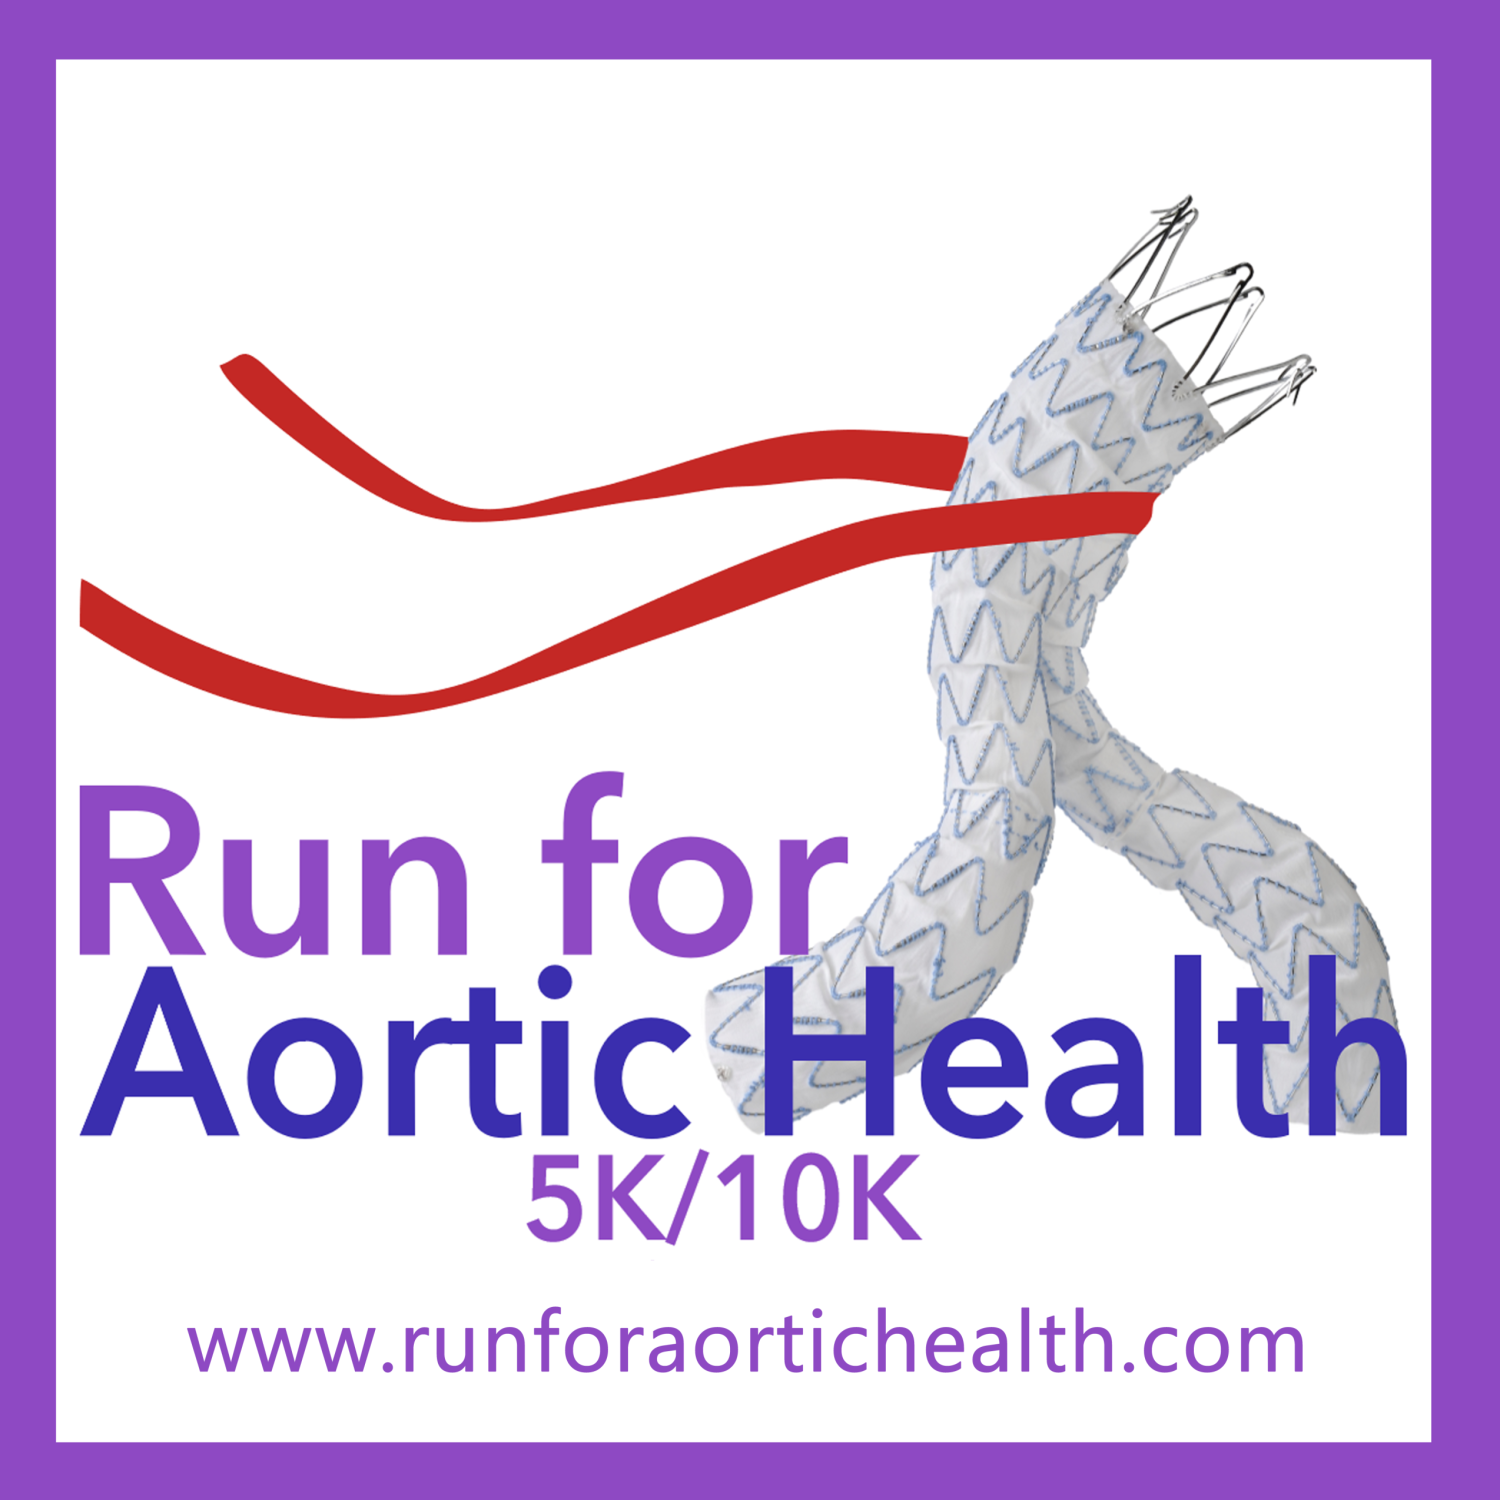 A cartoon of an aortic graft runs through the finish tape of a race. Text says "Run for Aortic Health 5K/10K www.runforaortichealth.com"